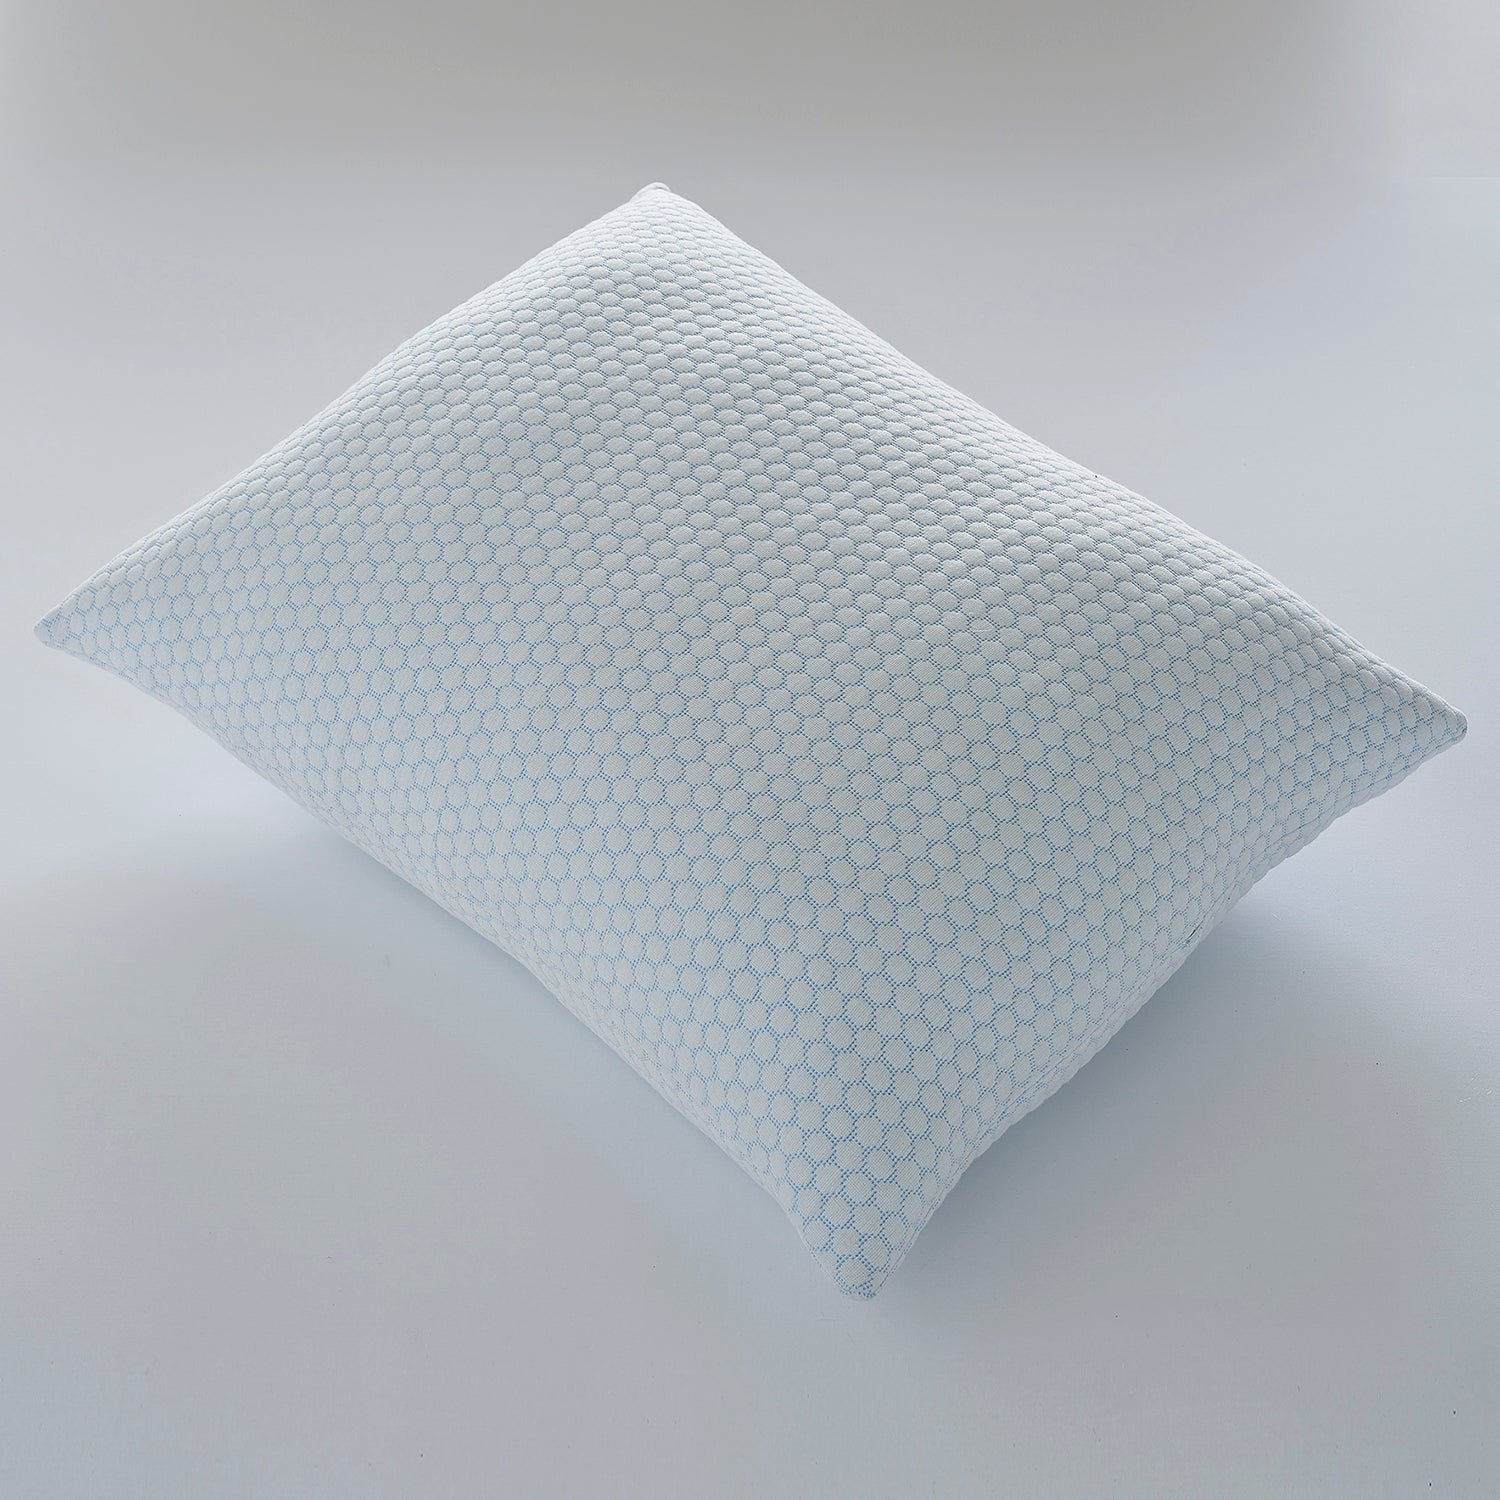 Gel Comfort Cushion, Personal Cushions